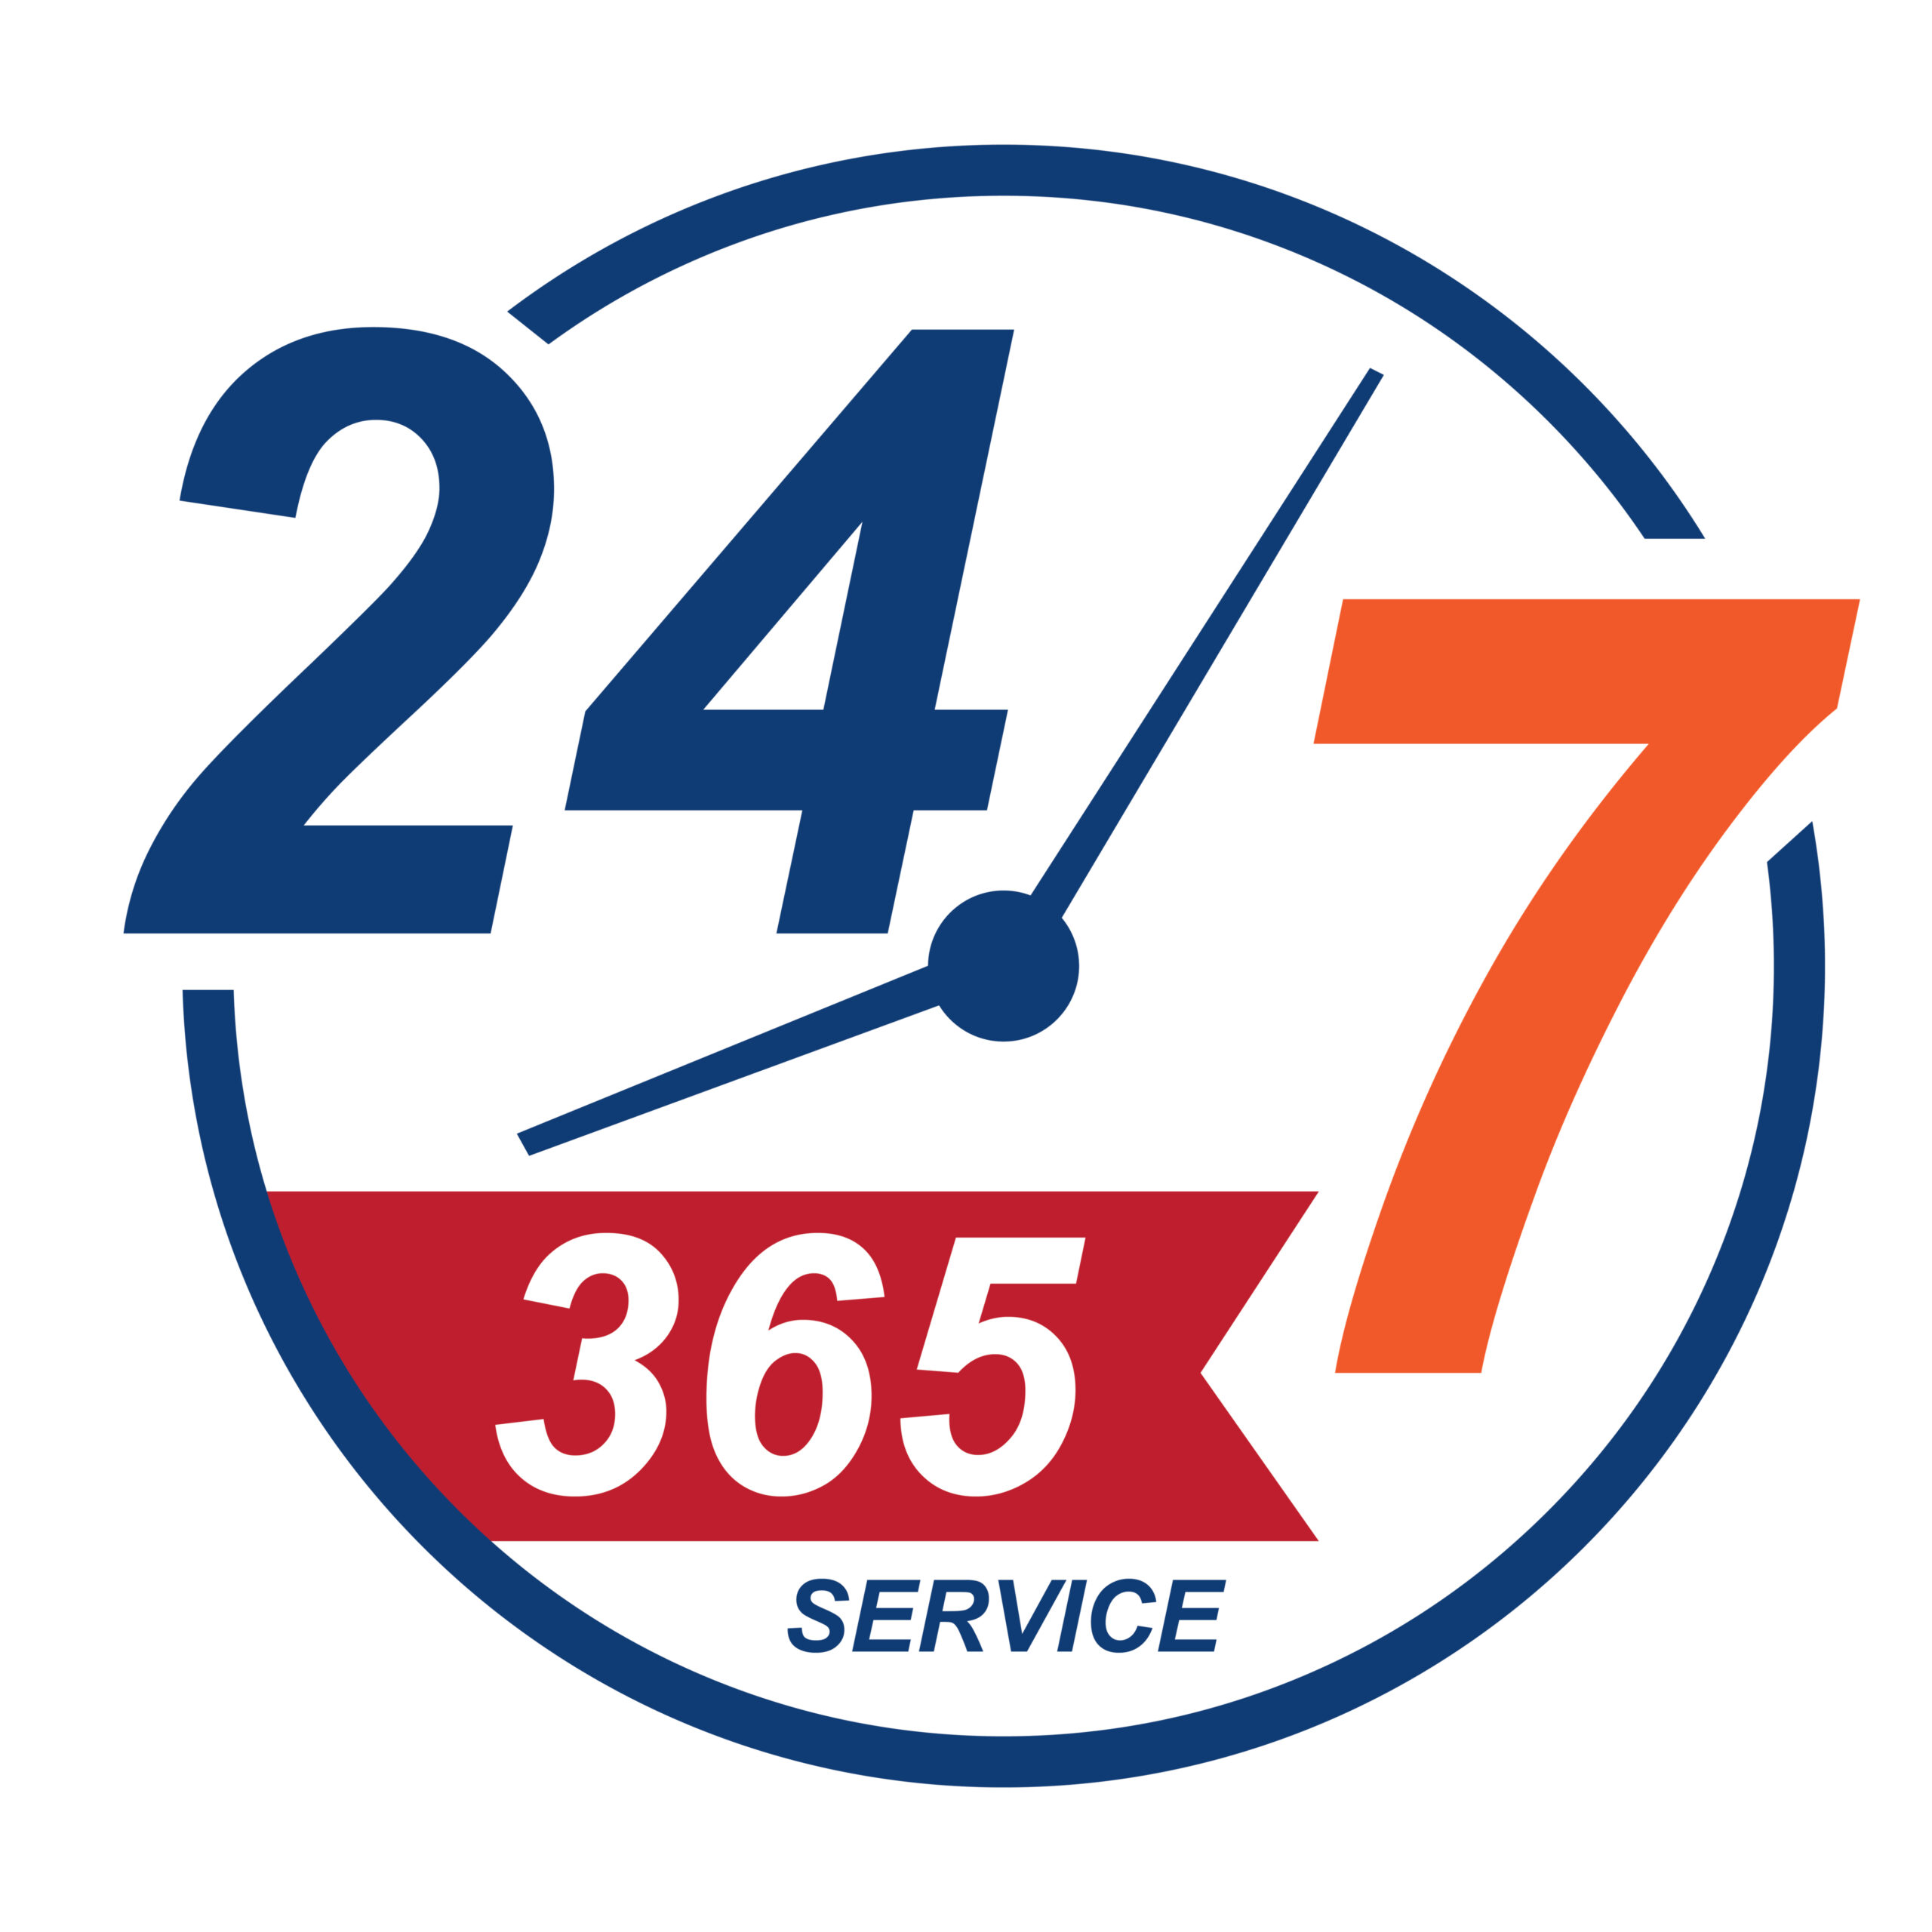 24/7 365 Service